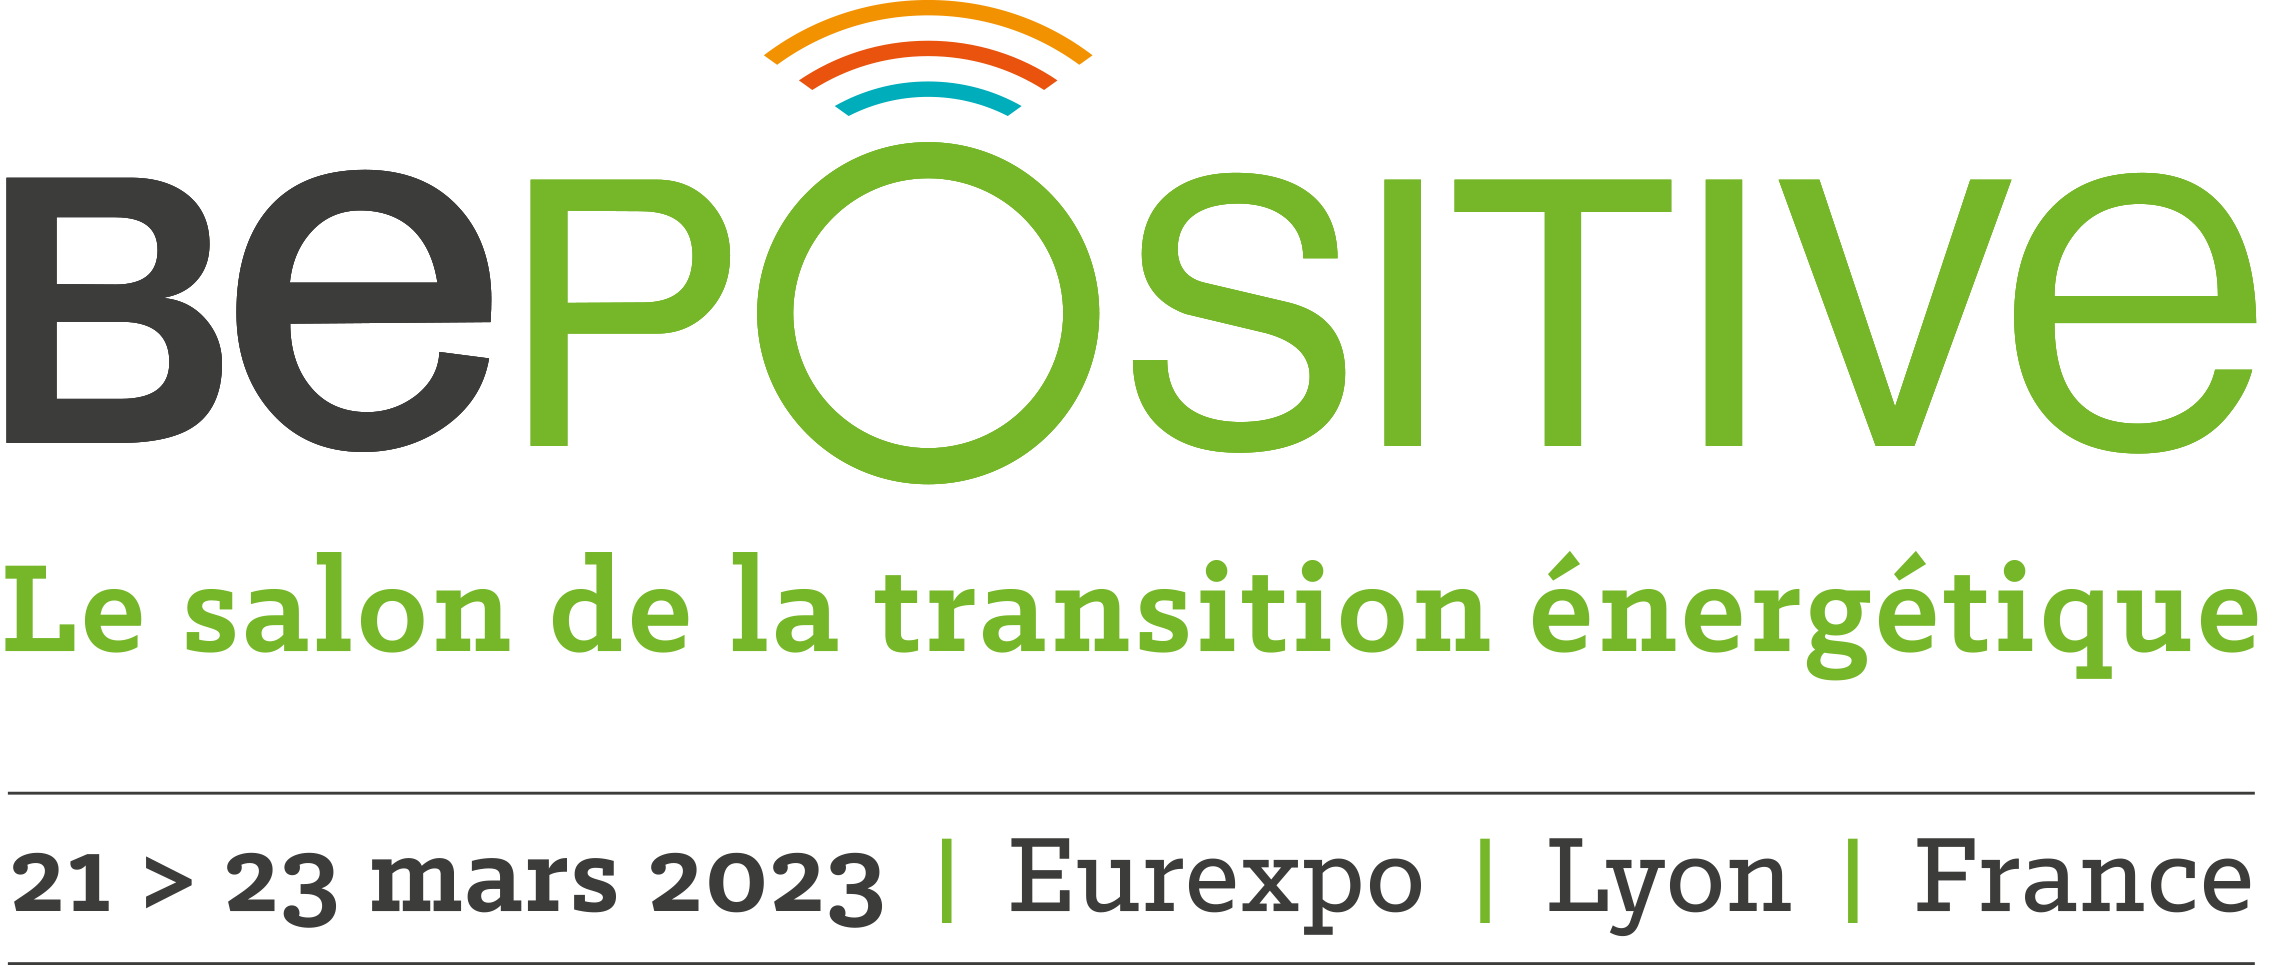 BE POSITIVE - Construisons ensemble un monde décarboné - 21 - 23 mars 2023 - Eurexpo Lyon